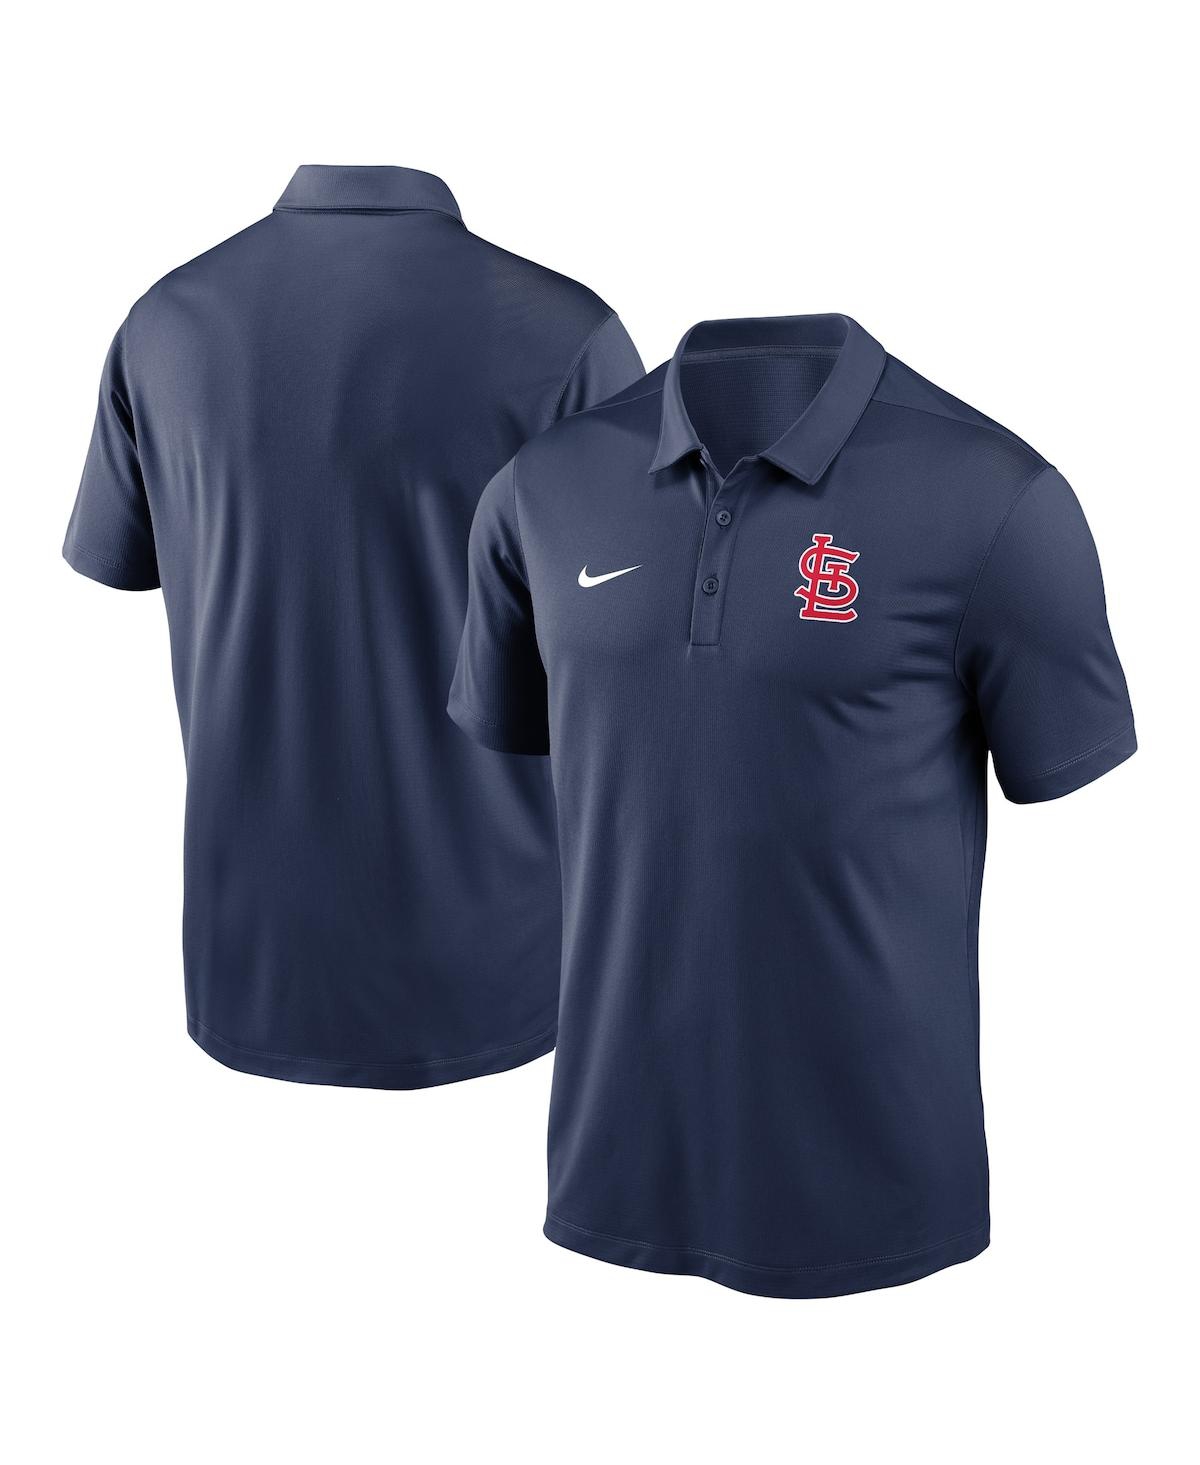 Shop Nike Men's  Navy St. Louis Cardinals Agility Performance Polo Shirt